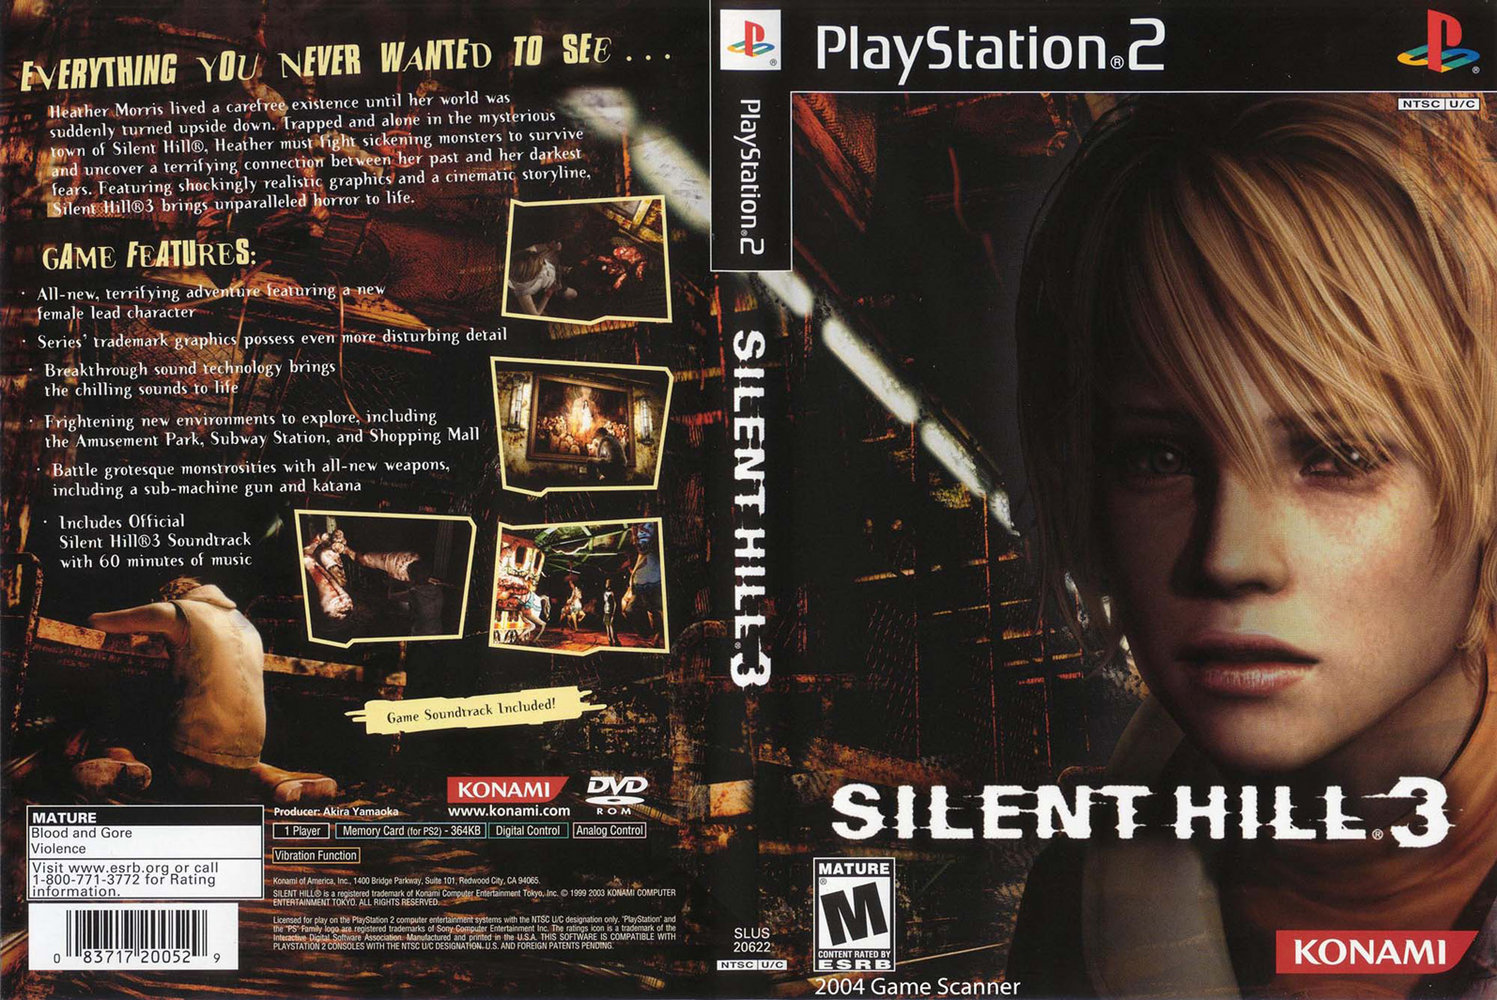 Silent Hill 3 Windows 7 Patch